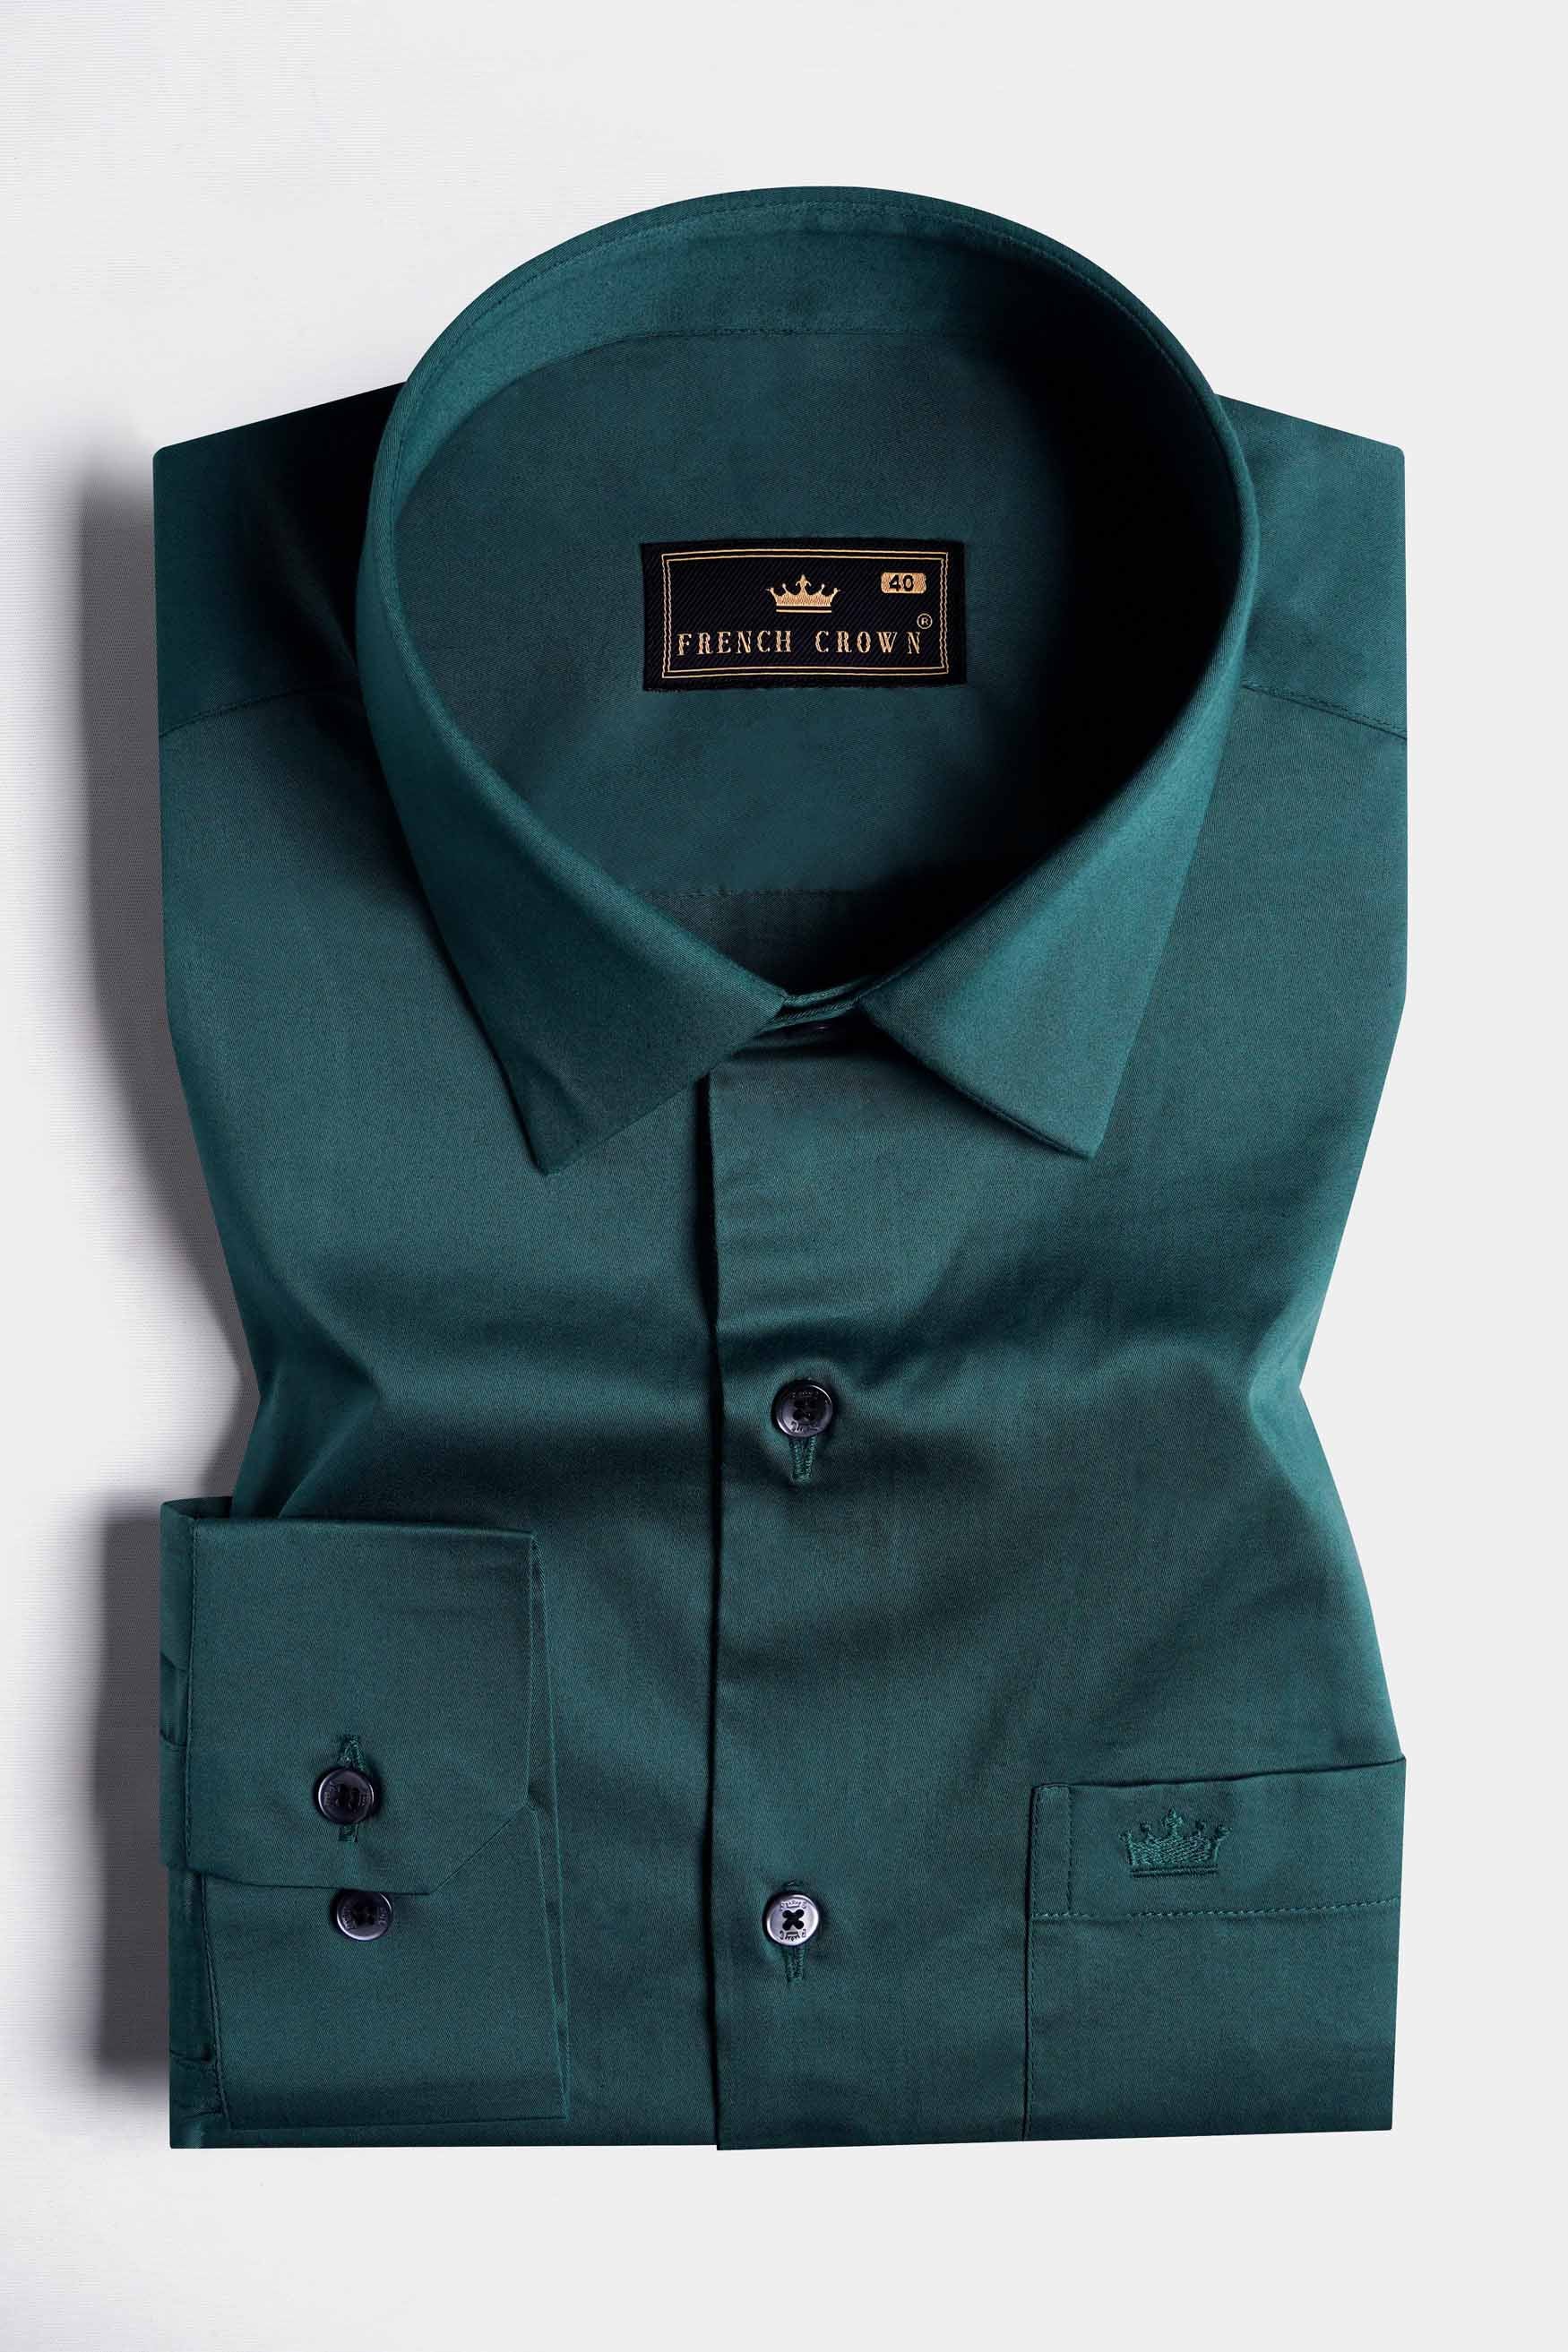 Dark Slate Green Subtle Sheen Super Soft Premium Cotton Shirt